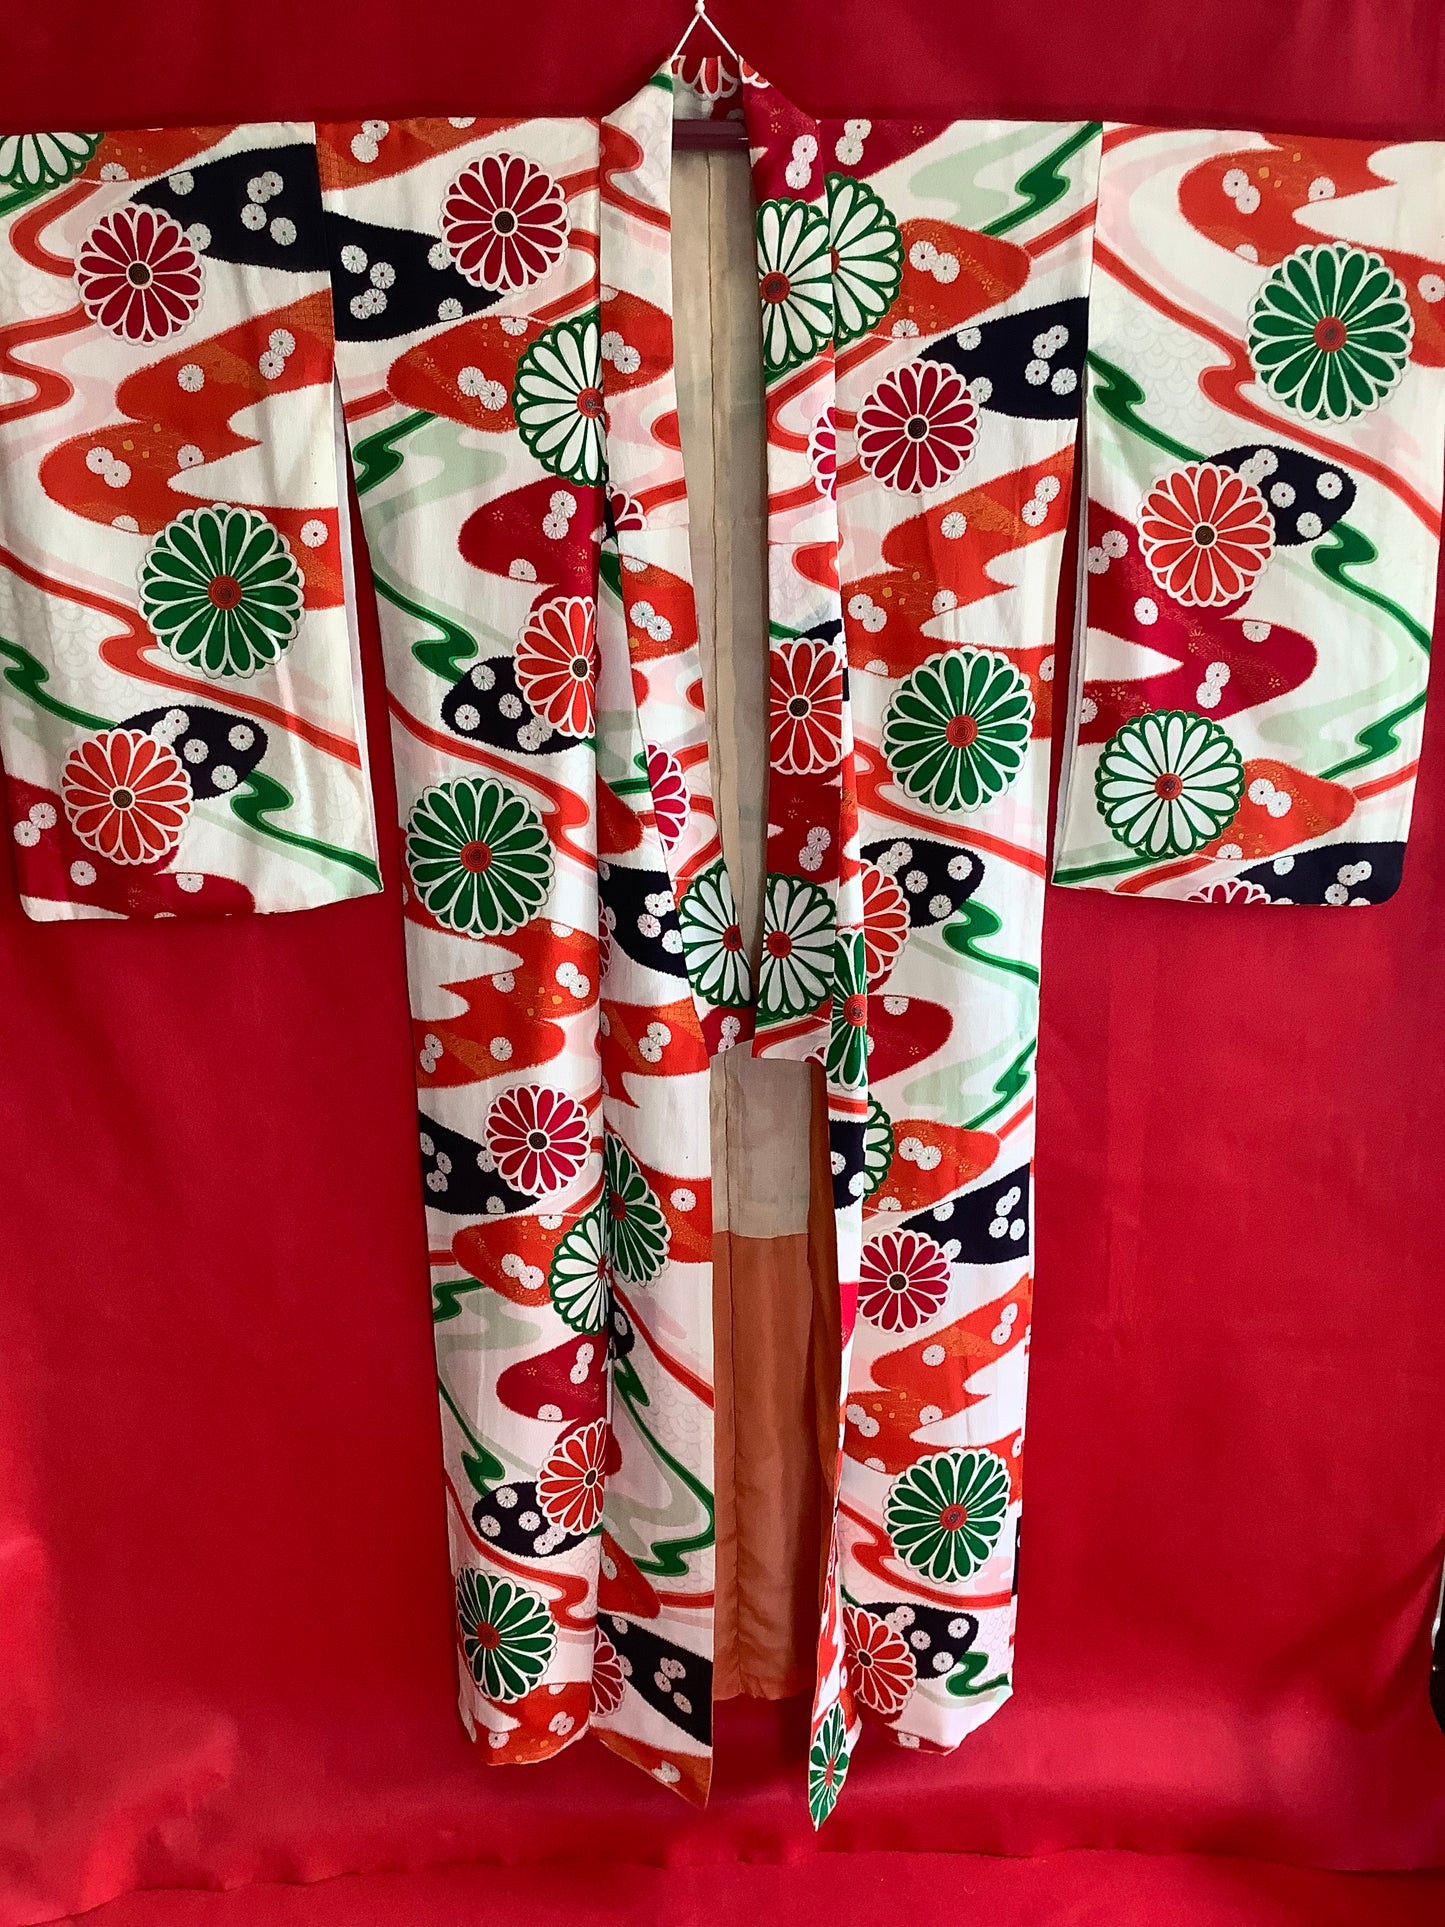 Woman’s Kimono